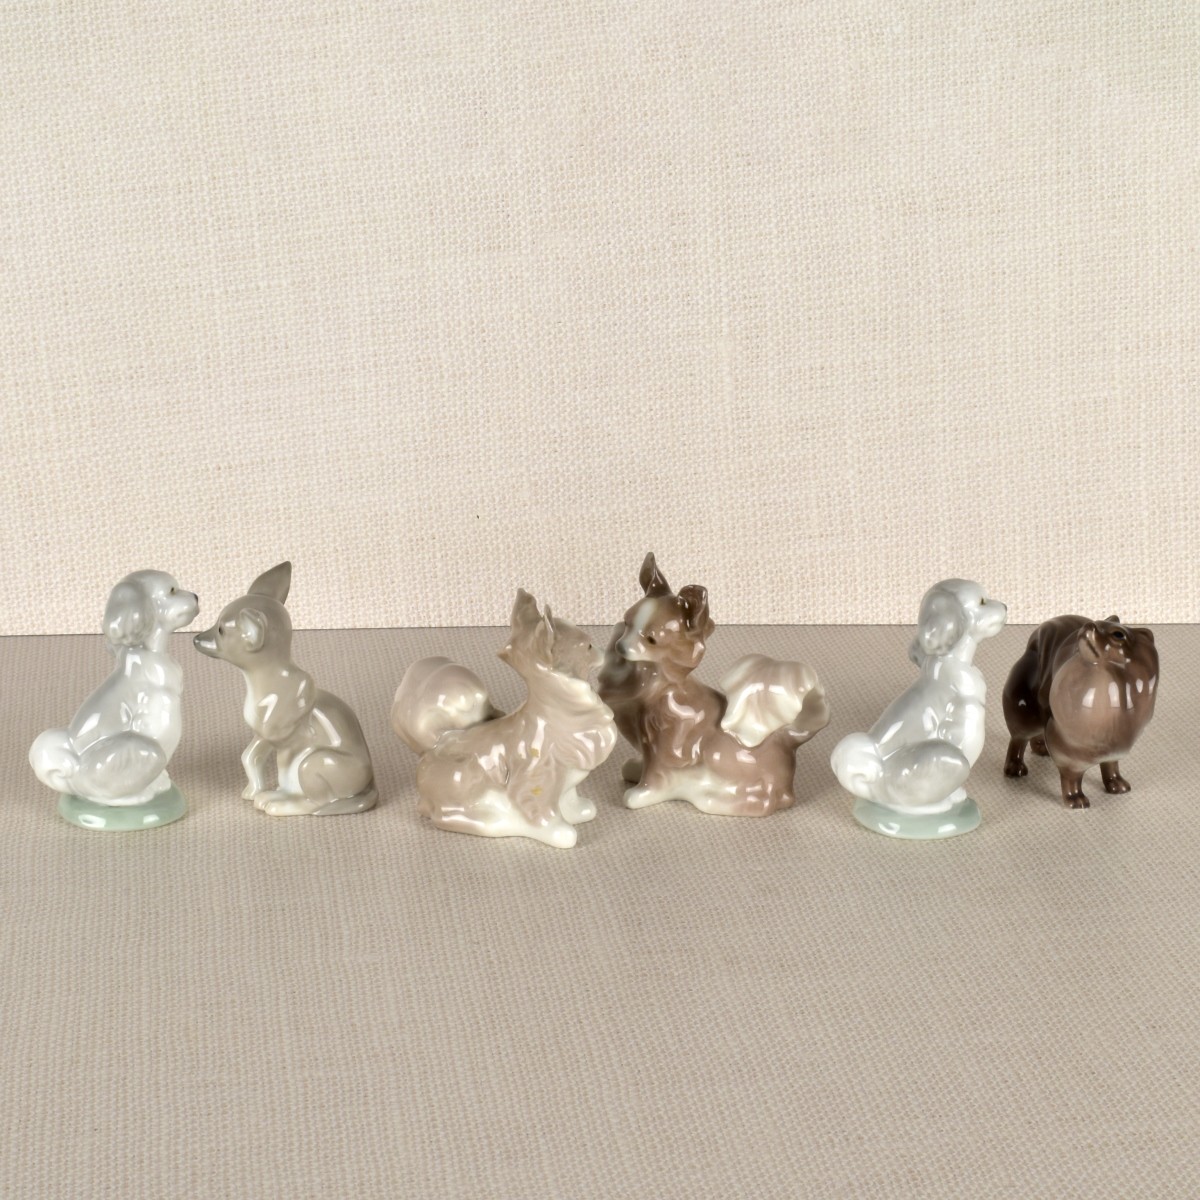 Six Porcelain Dog Figurines mostly Lladro